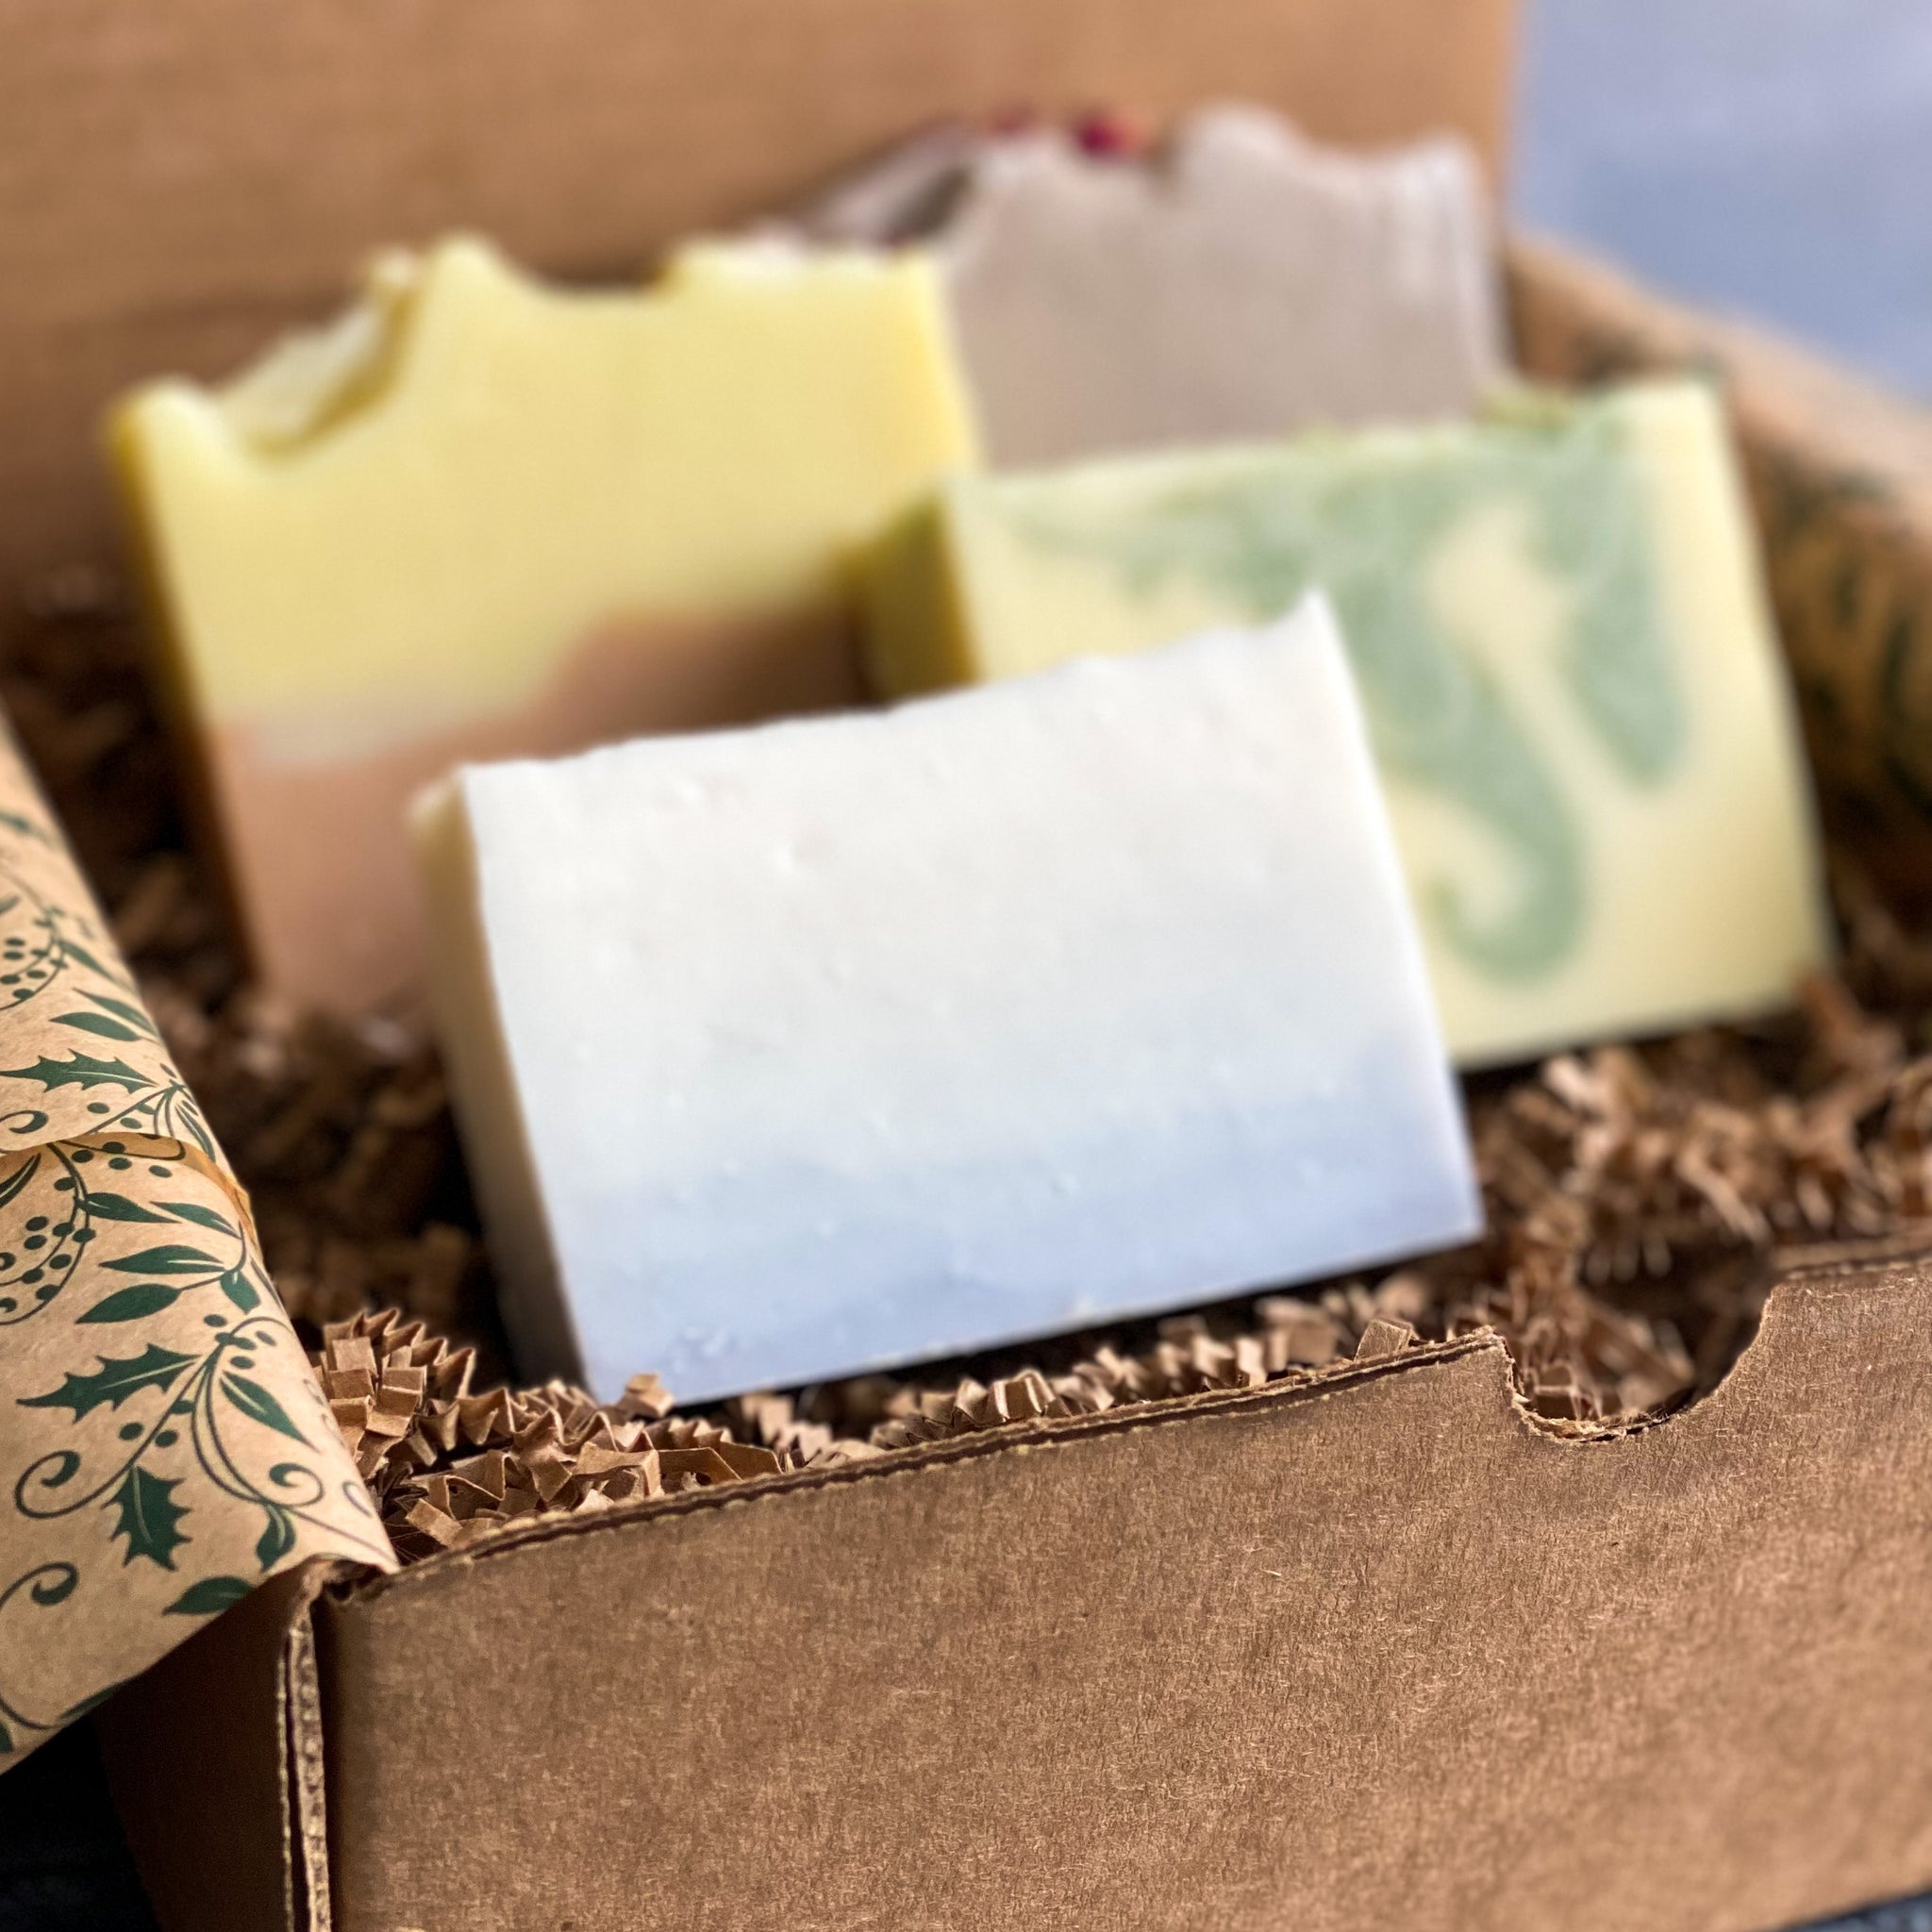 Classic Favorites Soap Gift Box